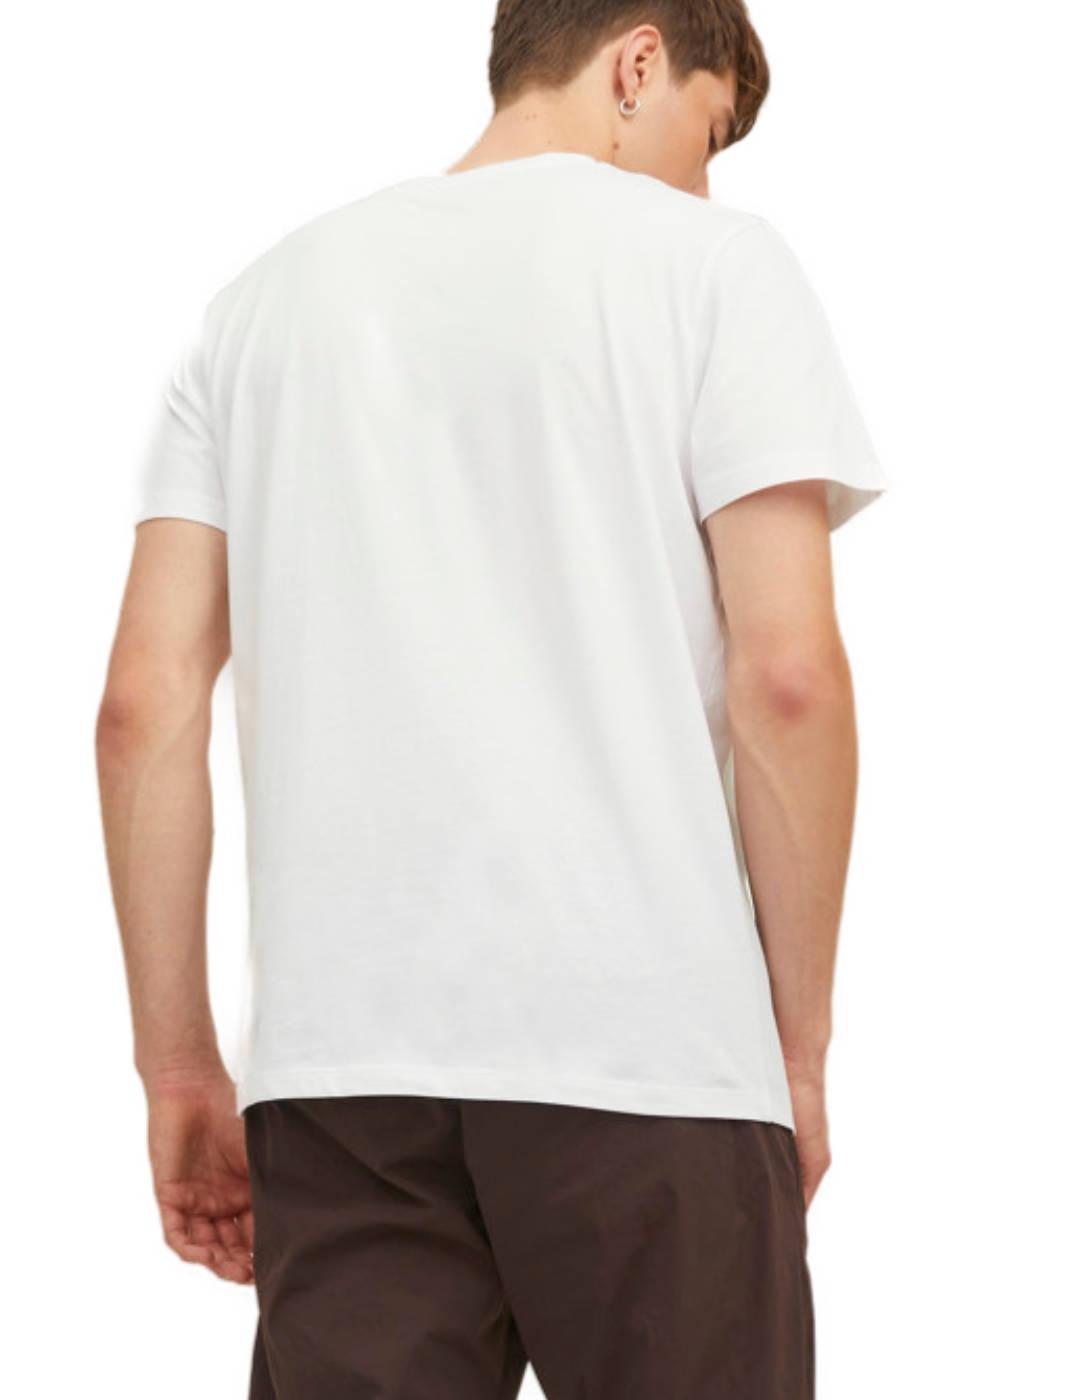 Camiseta Jack&Jones Flag blanco para hombre-c